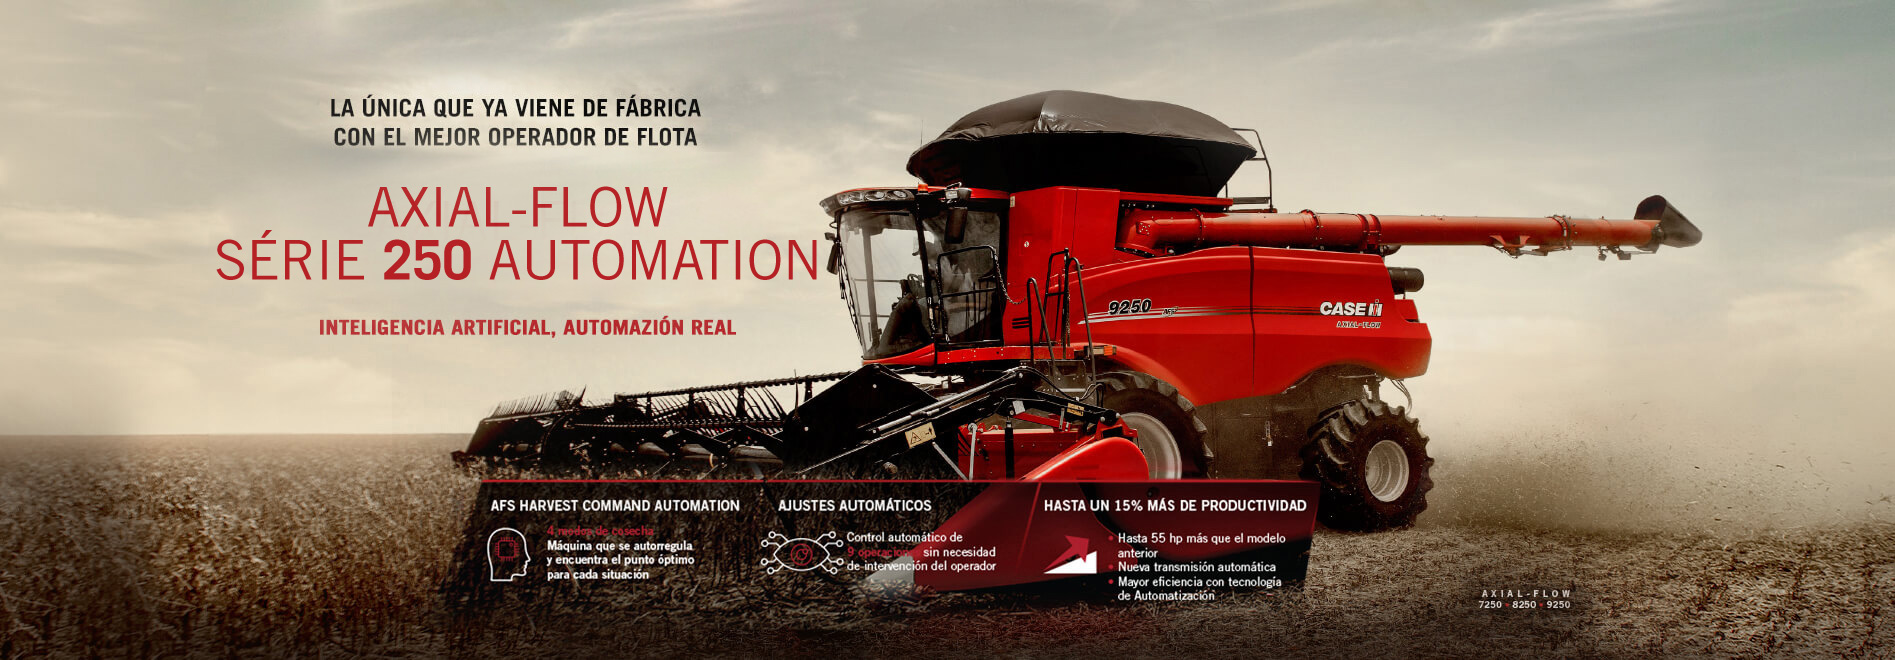 Axial-Flow Série 250 Automation